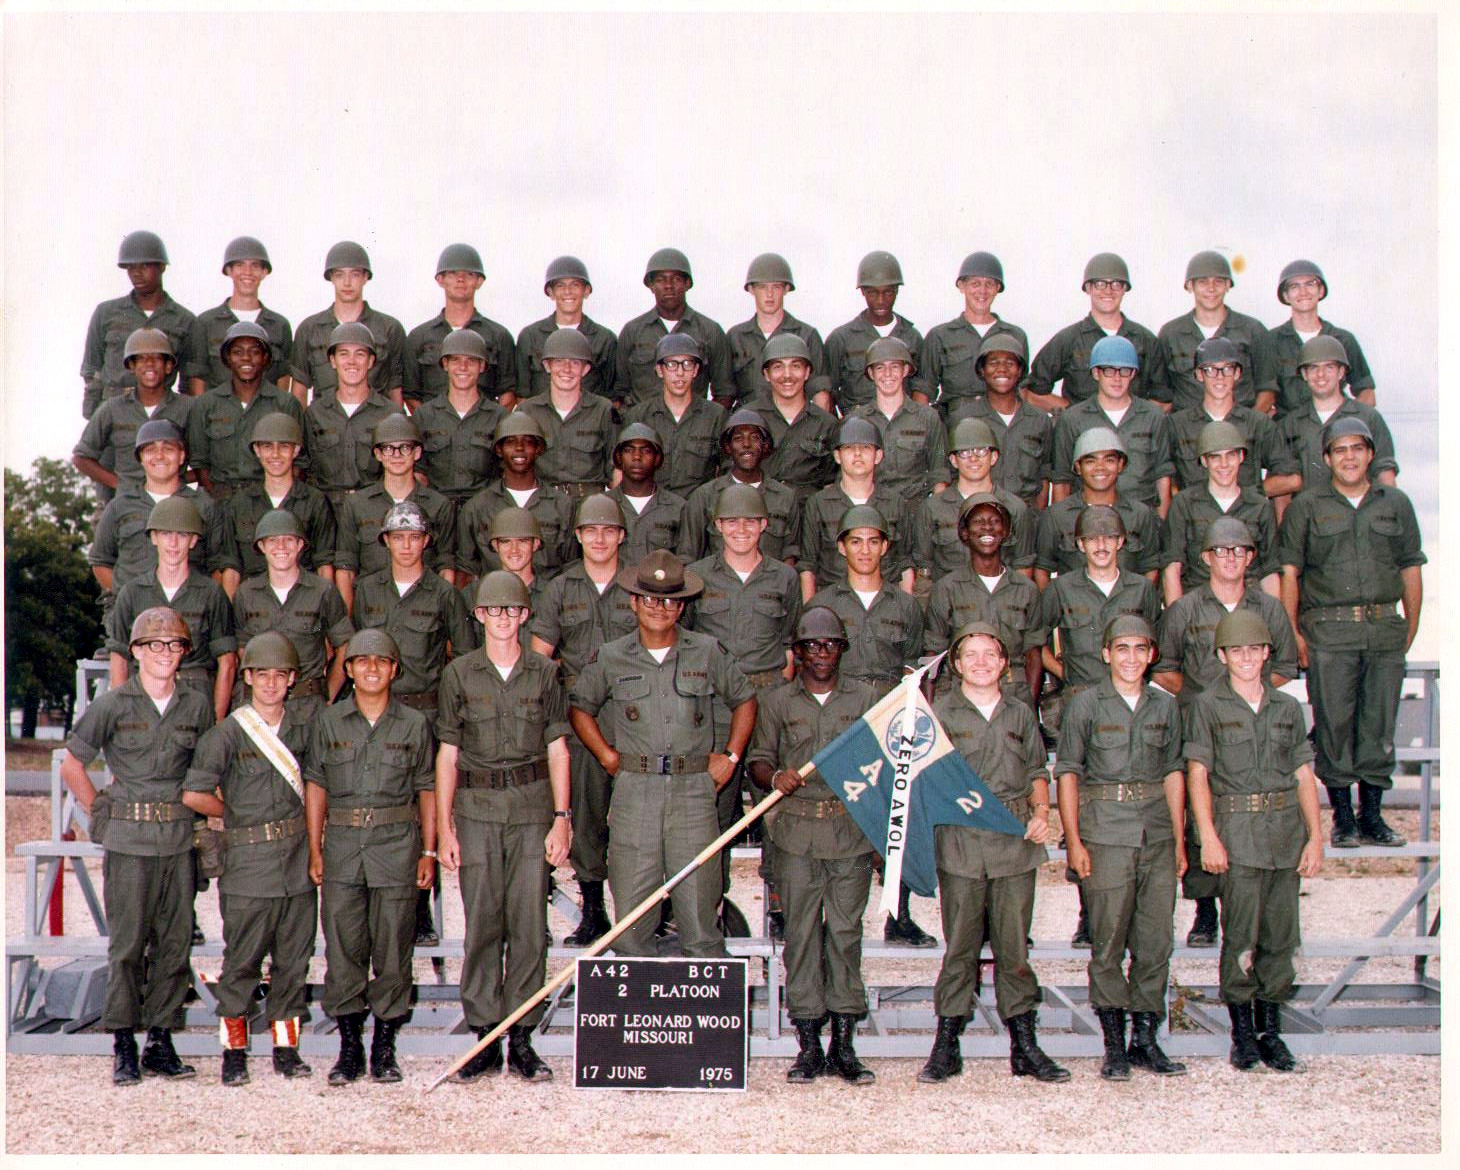 Fort Leonard Wood, MO 1975,Fort Leonard Wood,A42,2nd Platoon The